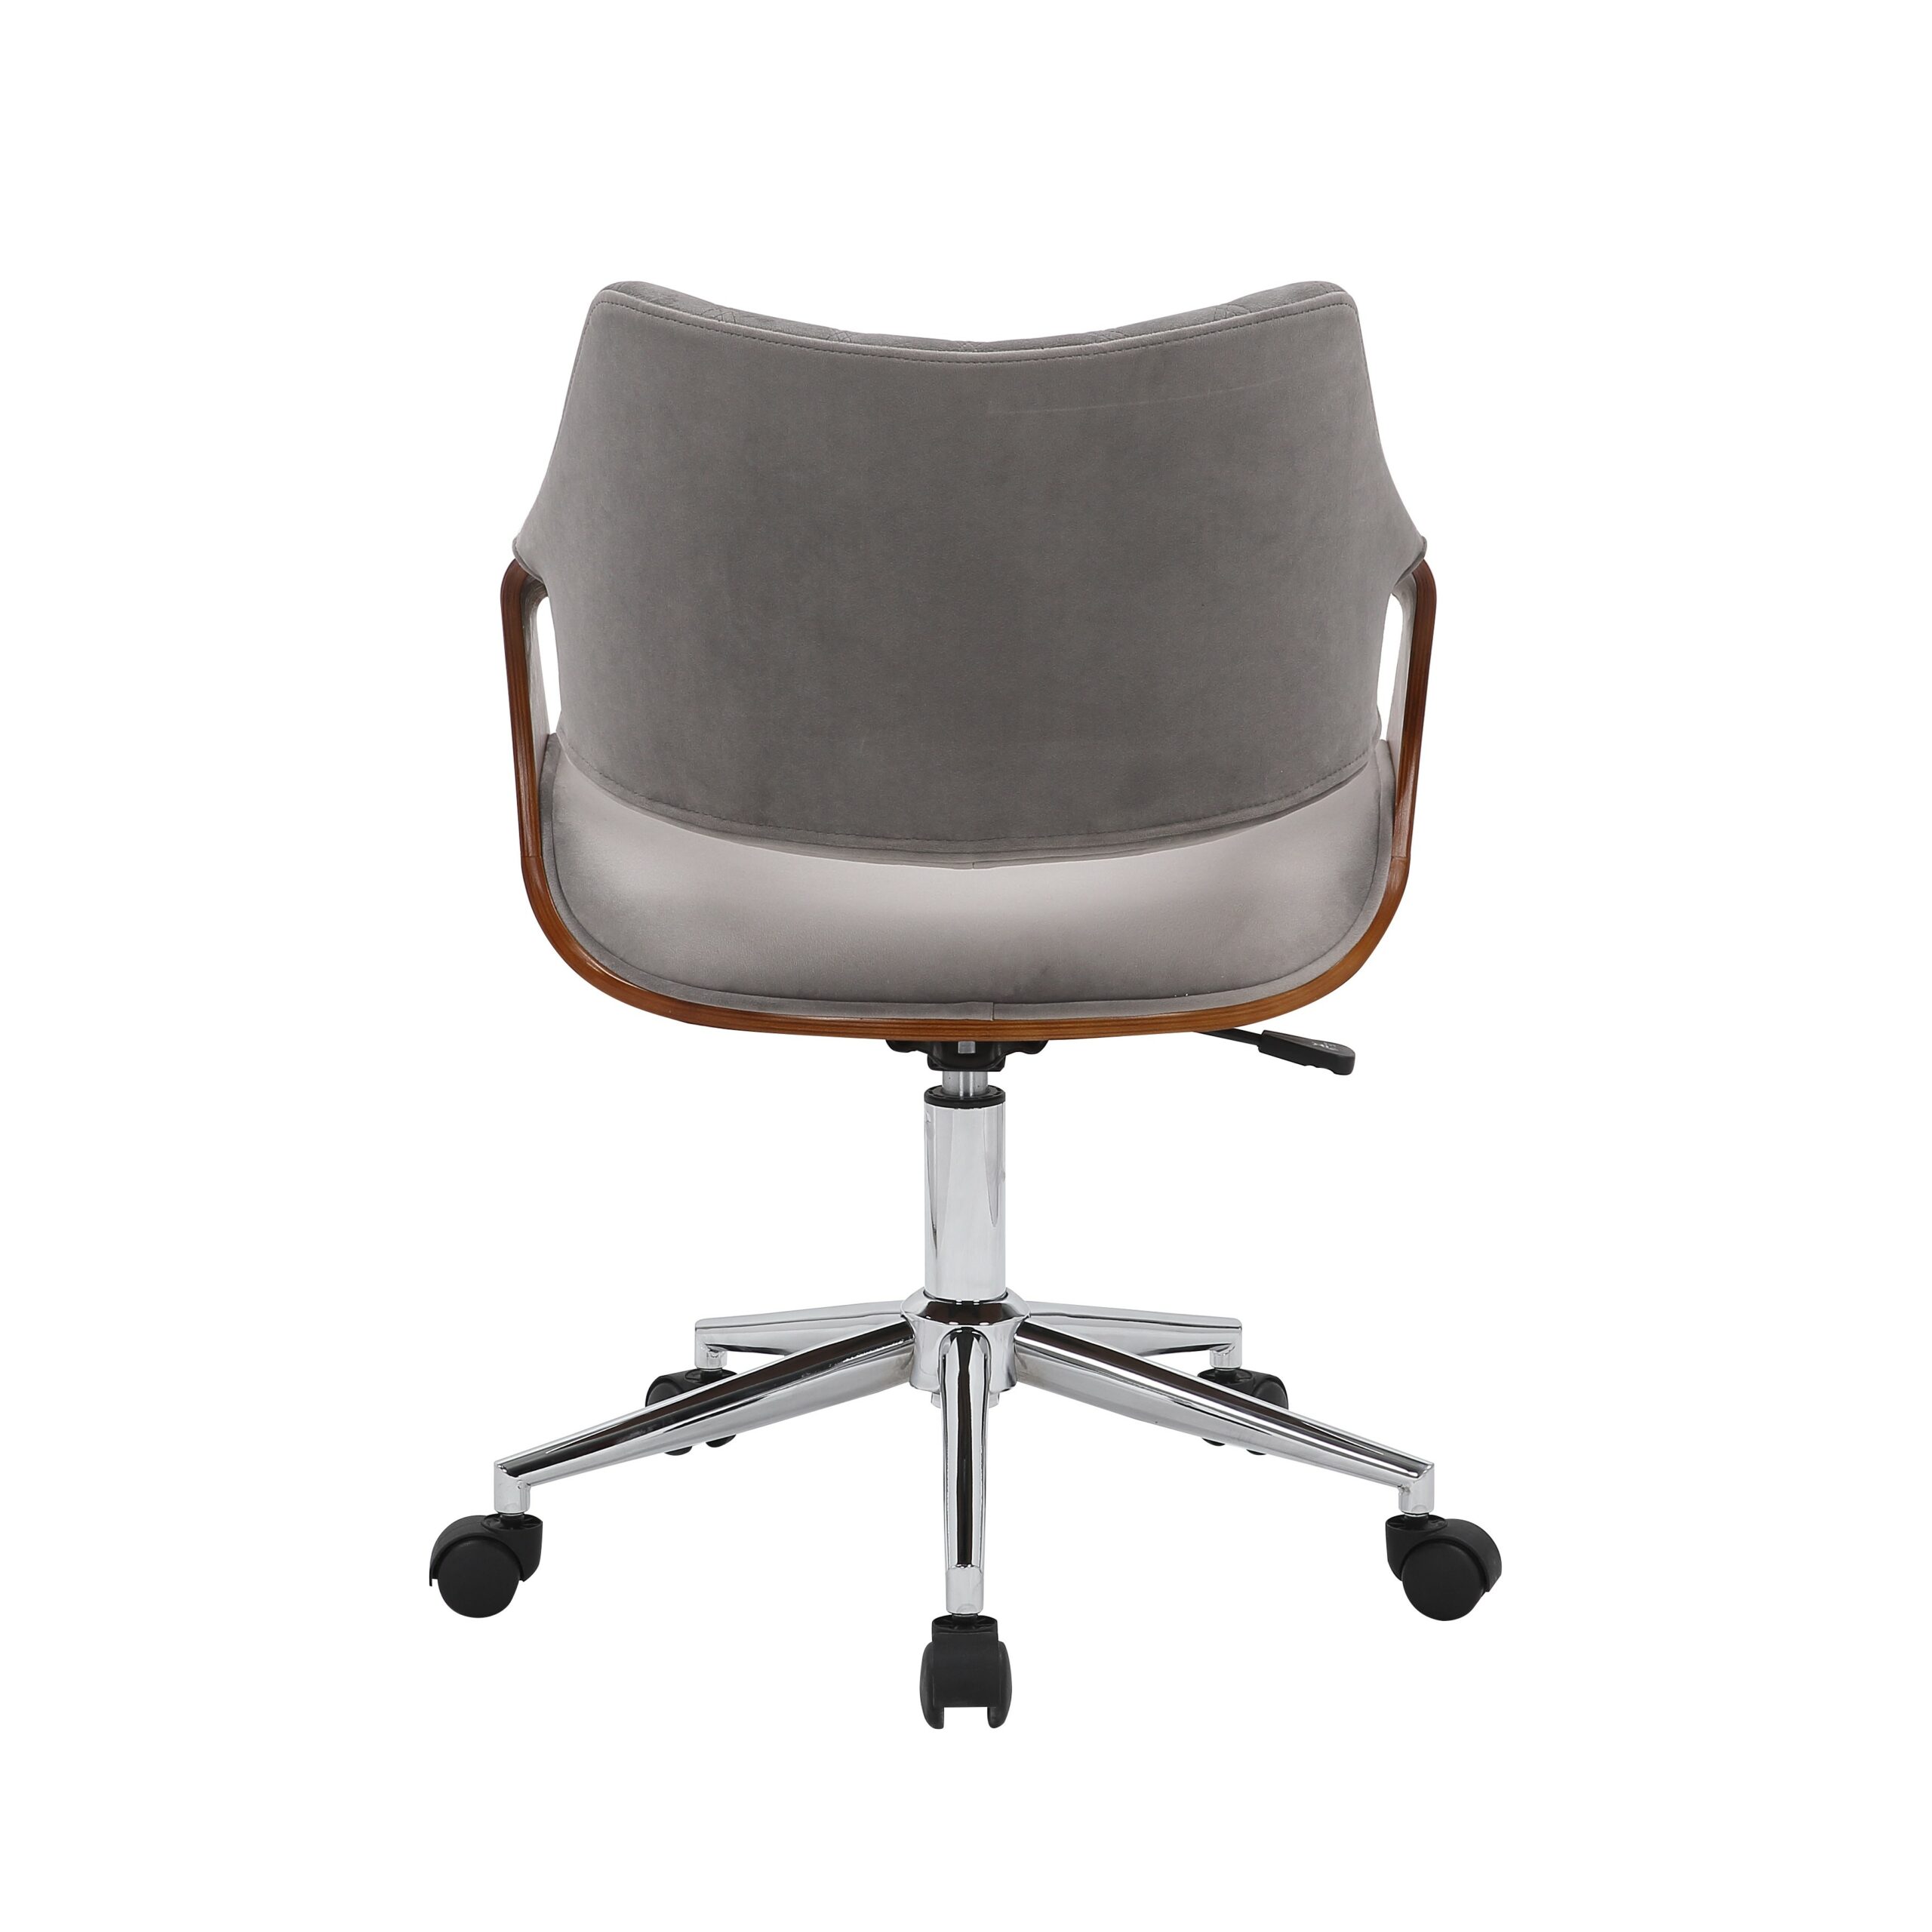 COLT work chair walnut/gray velvet - Newline